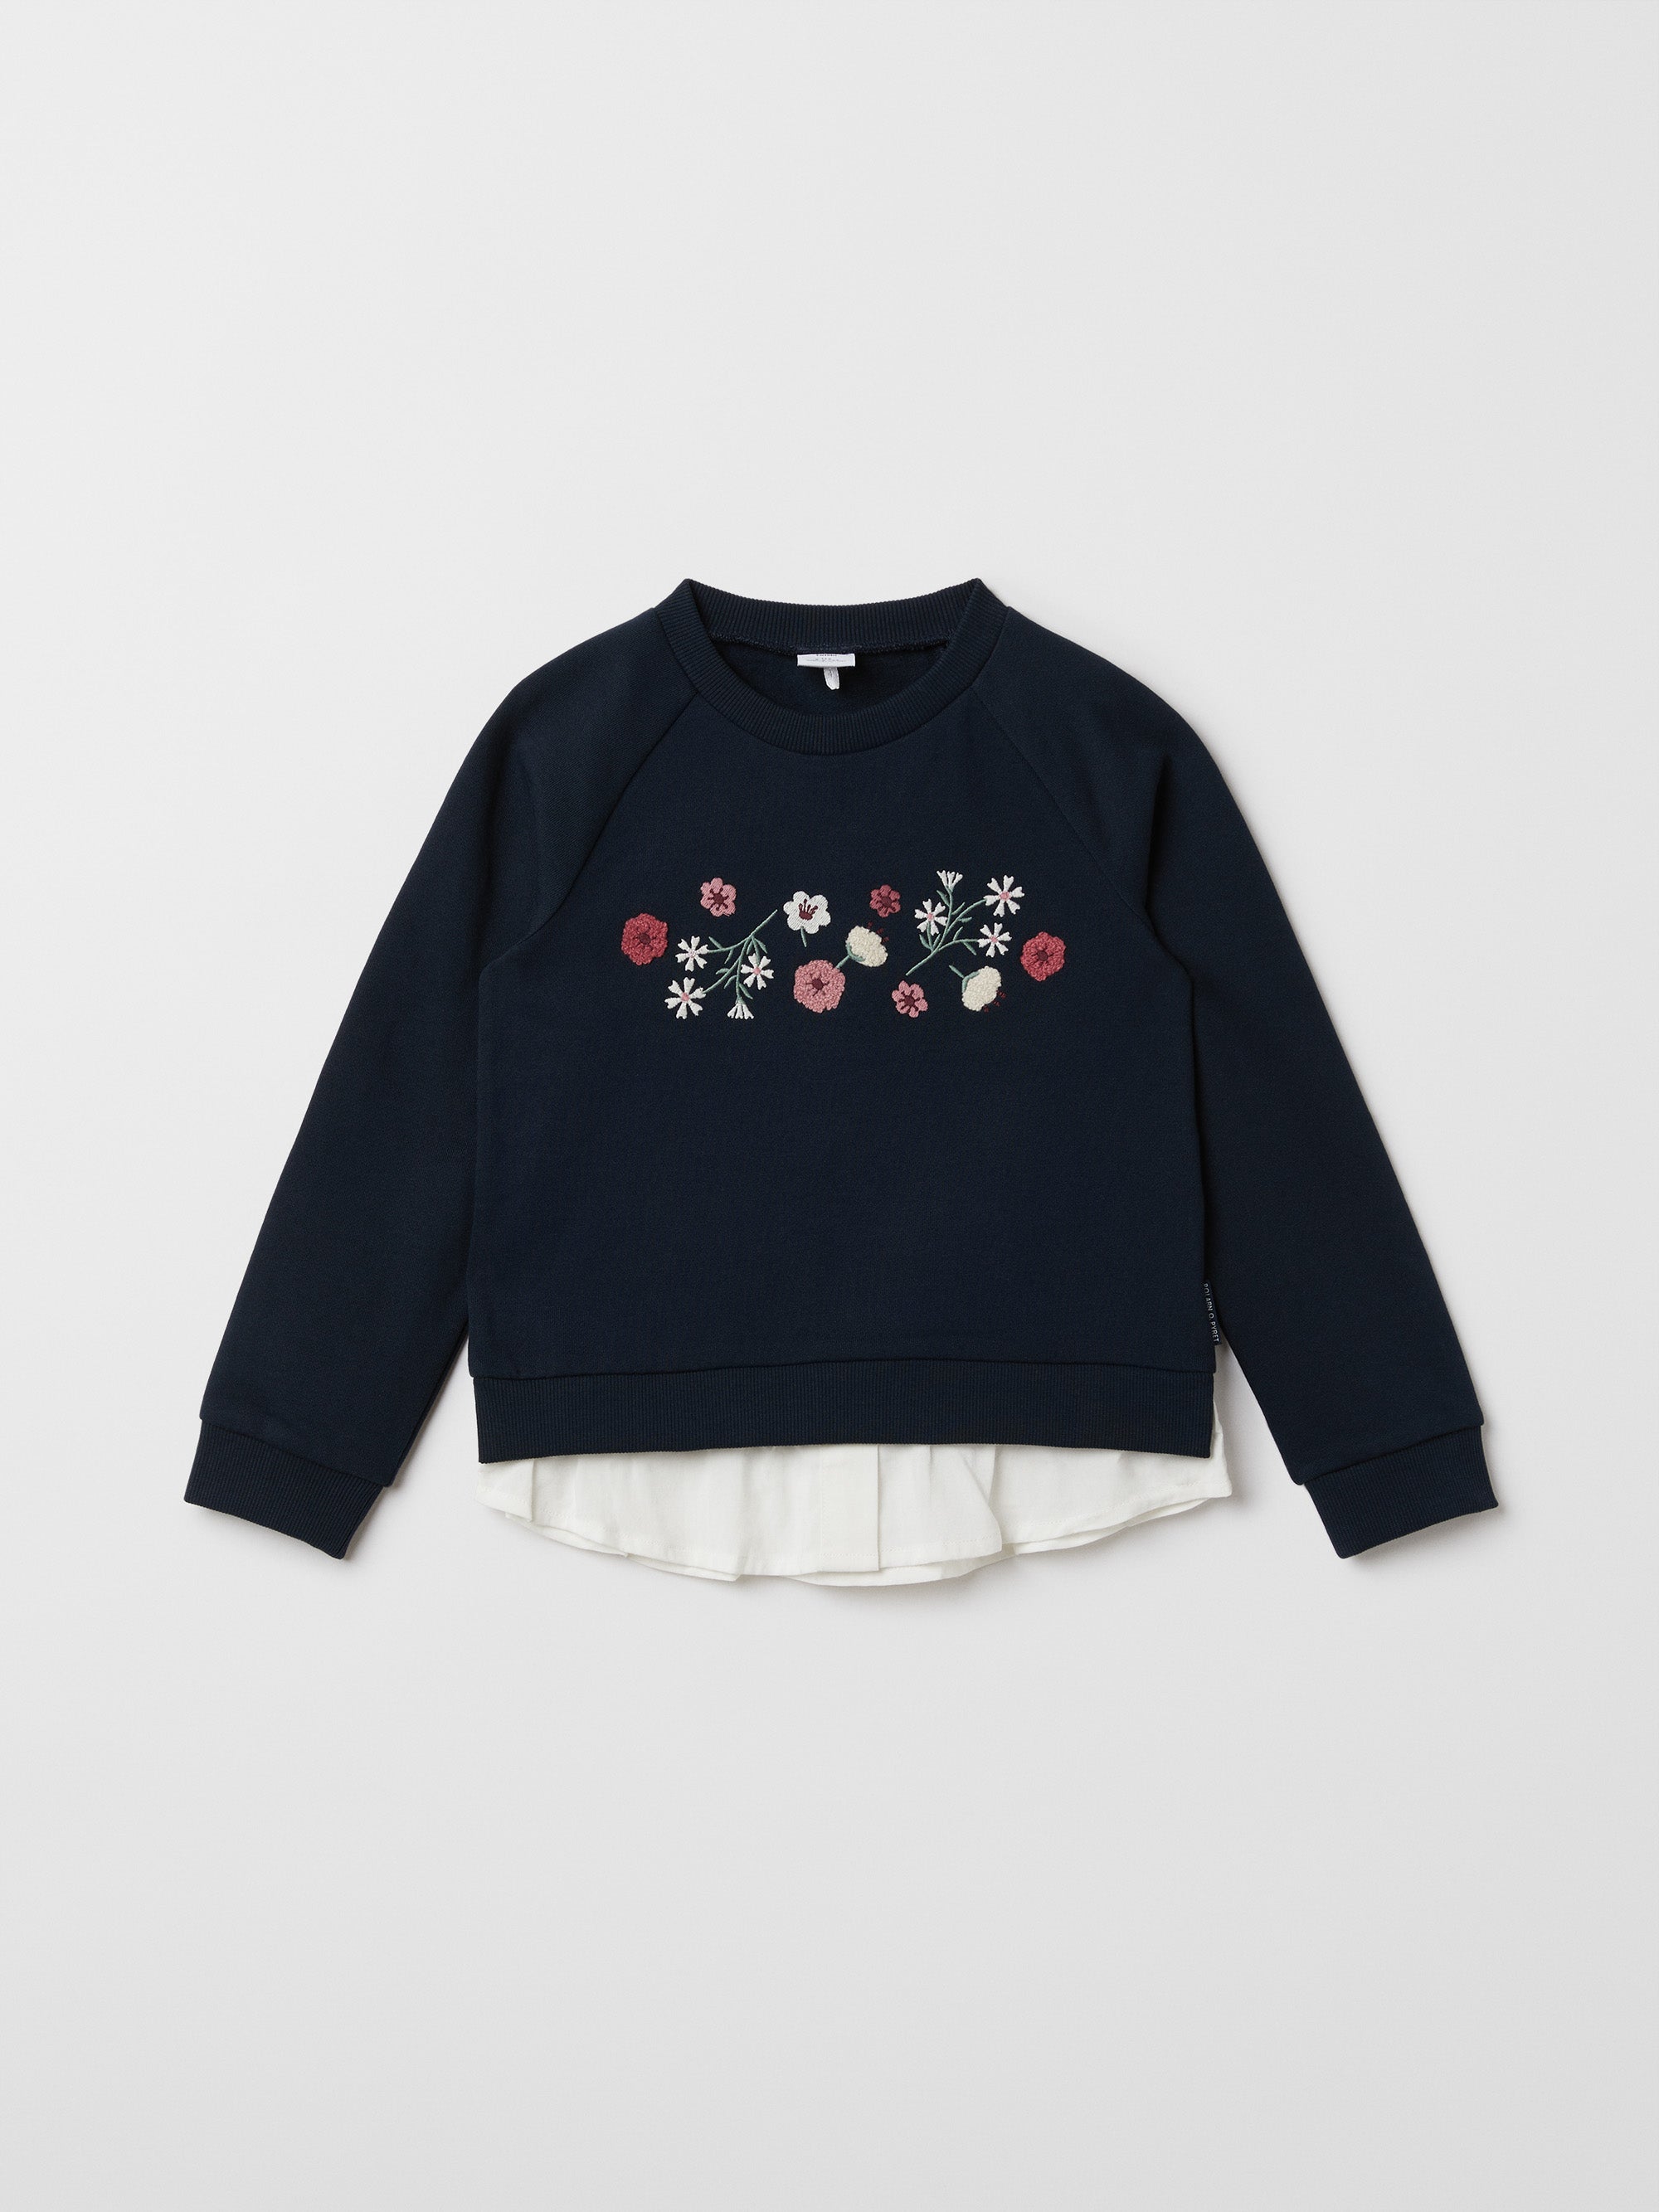 Embroidered Floral Kids Sweatshirt